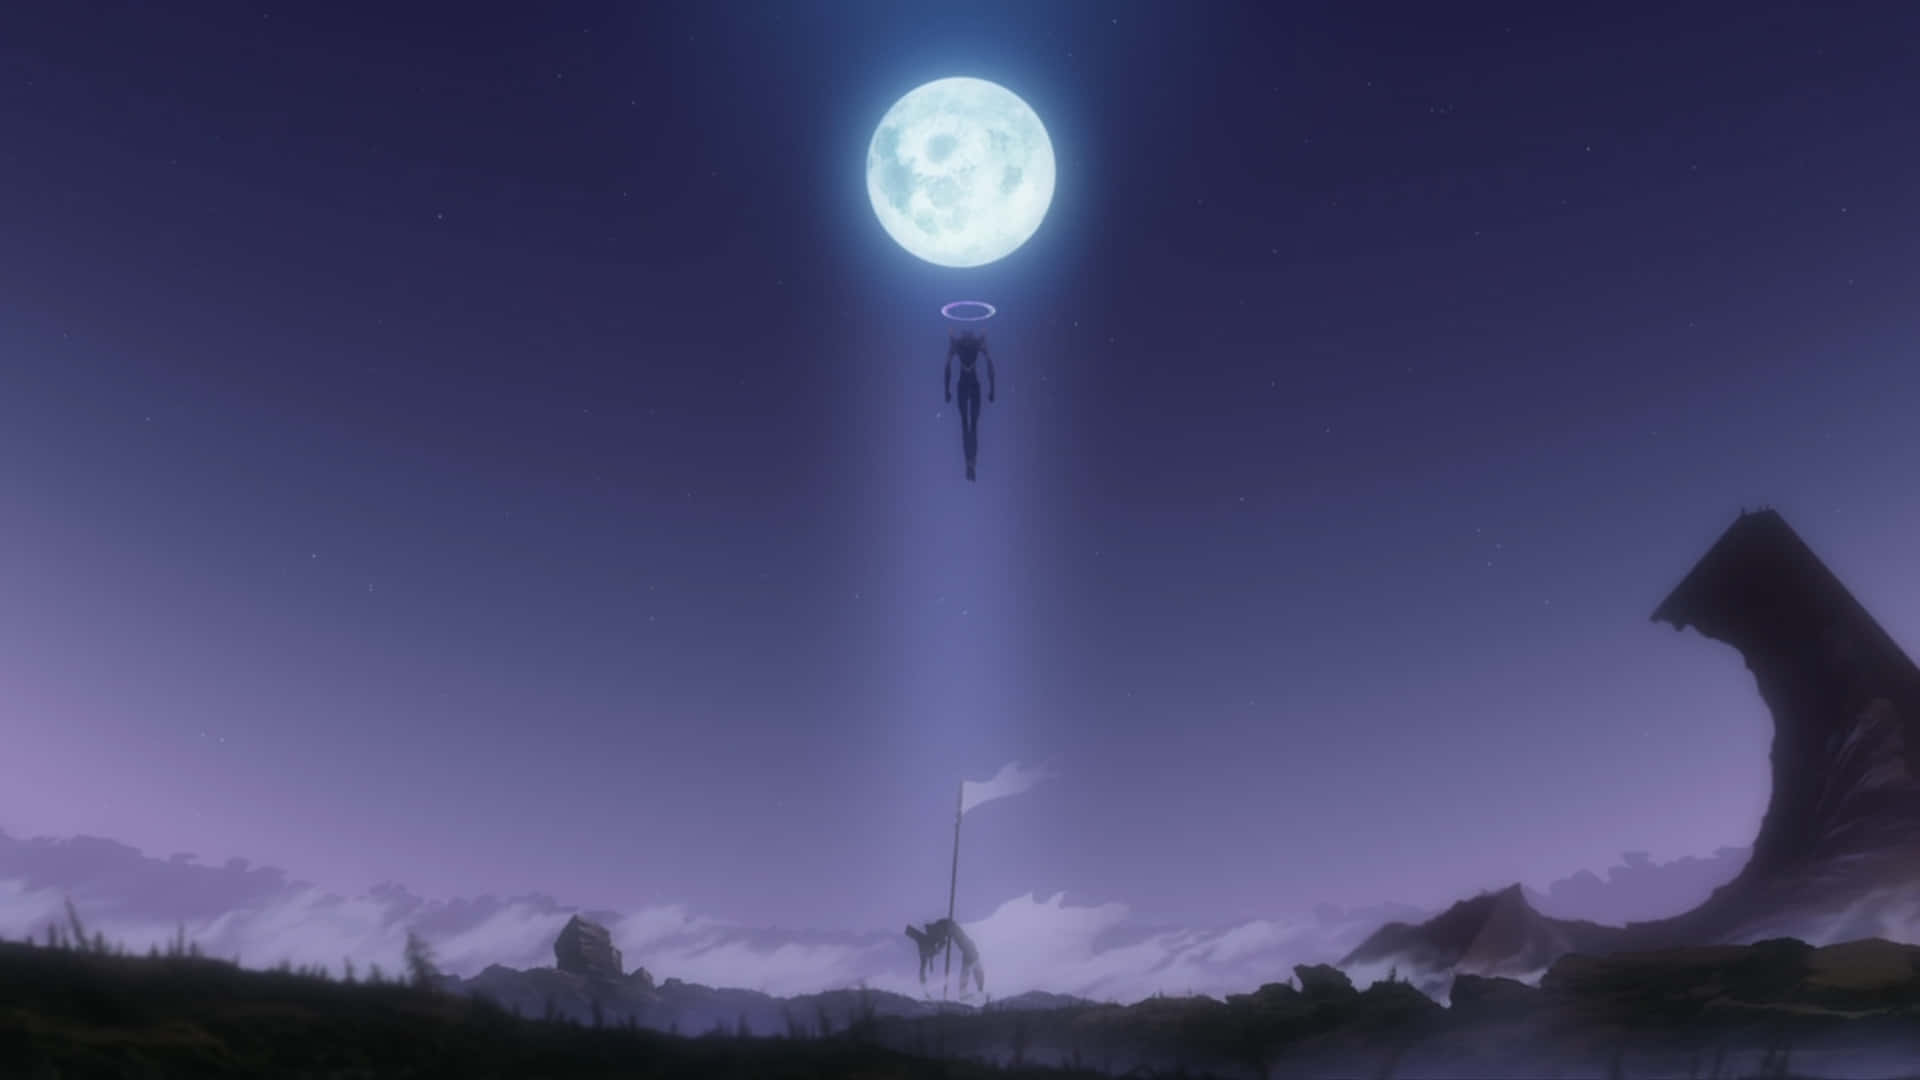 Shinjiog Asuka Fra Den Populære Anime Serie Neon Genesis Evangelion.